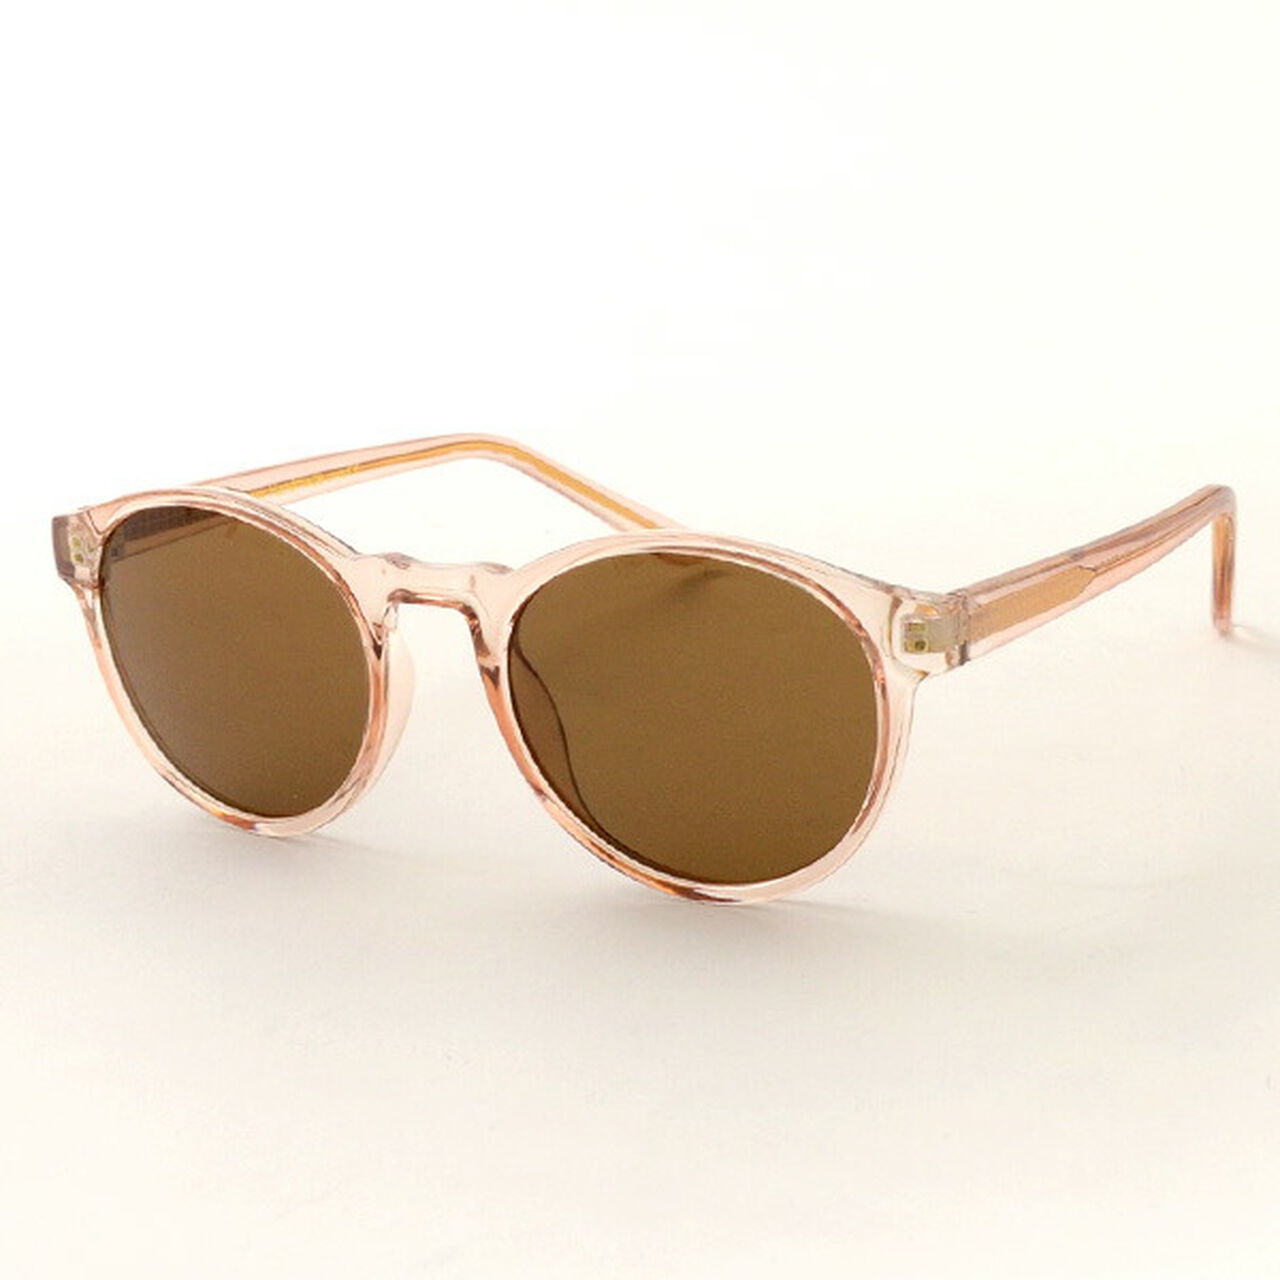 Marvin Cell Frame Sunglasses,, large image number 12